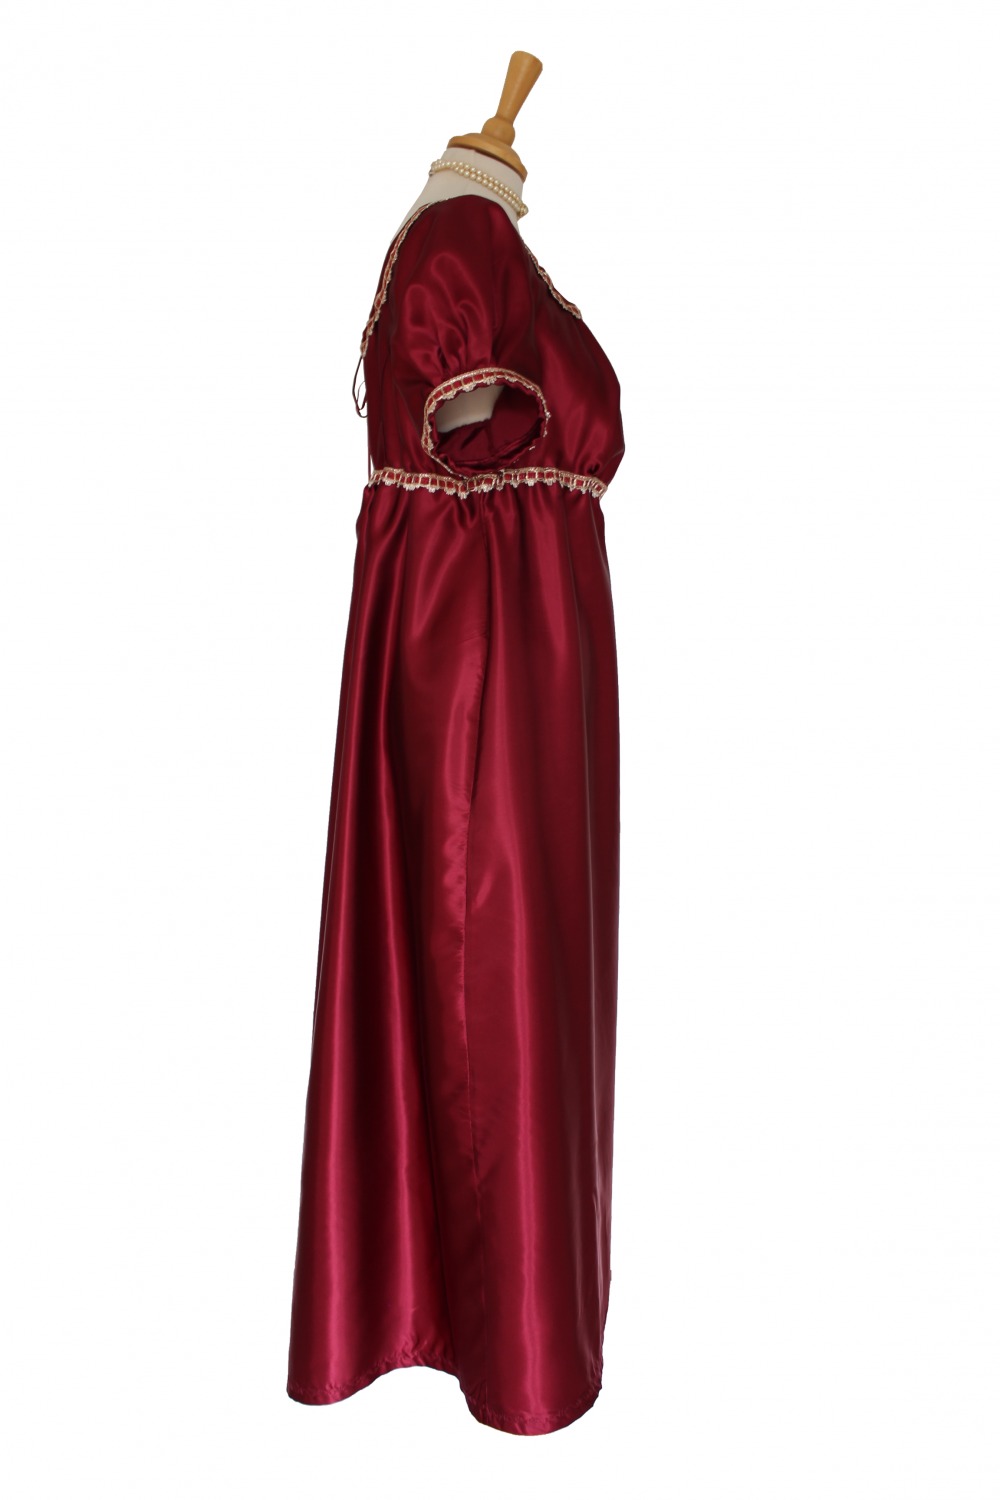 Ladies 18th 19th Regency Jane Austen Petite Costume Evening Ball Gown Size 14 - 16 Image